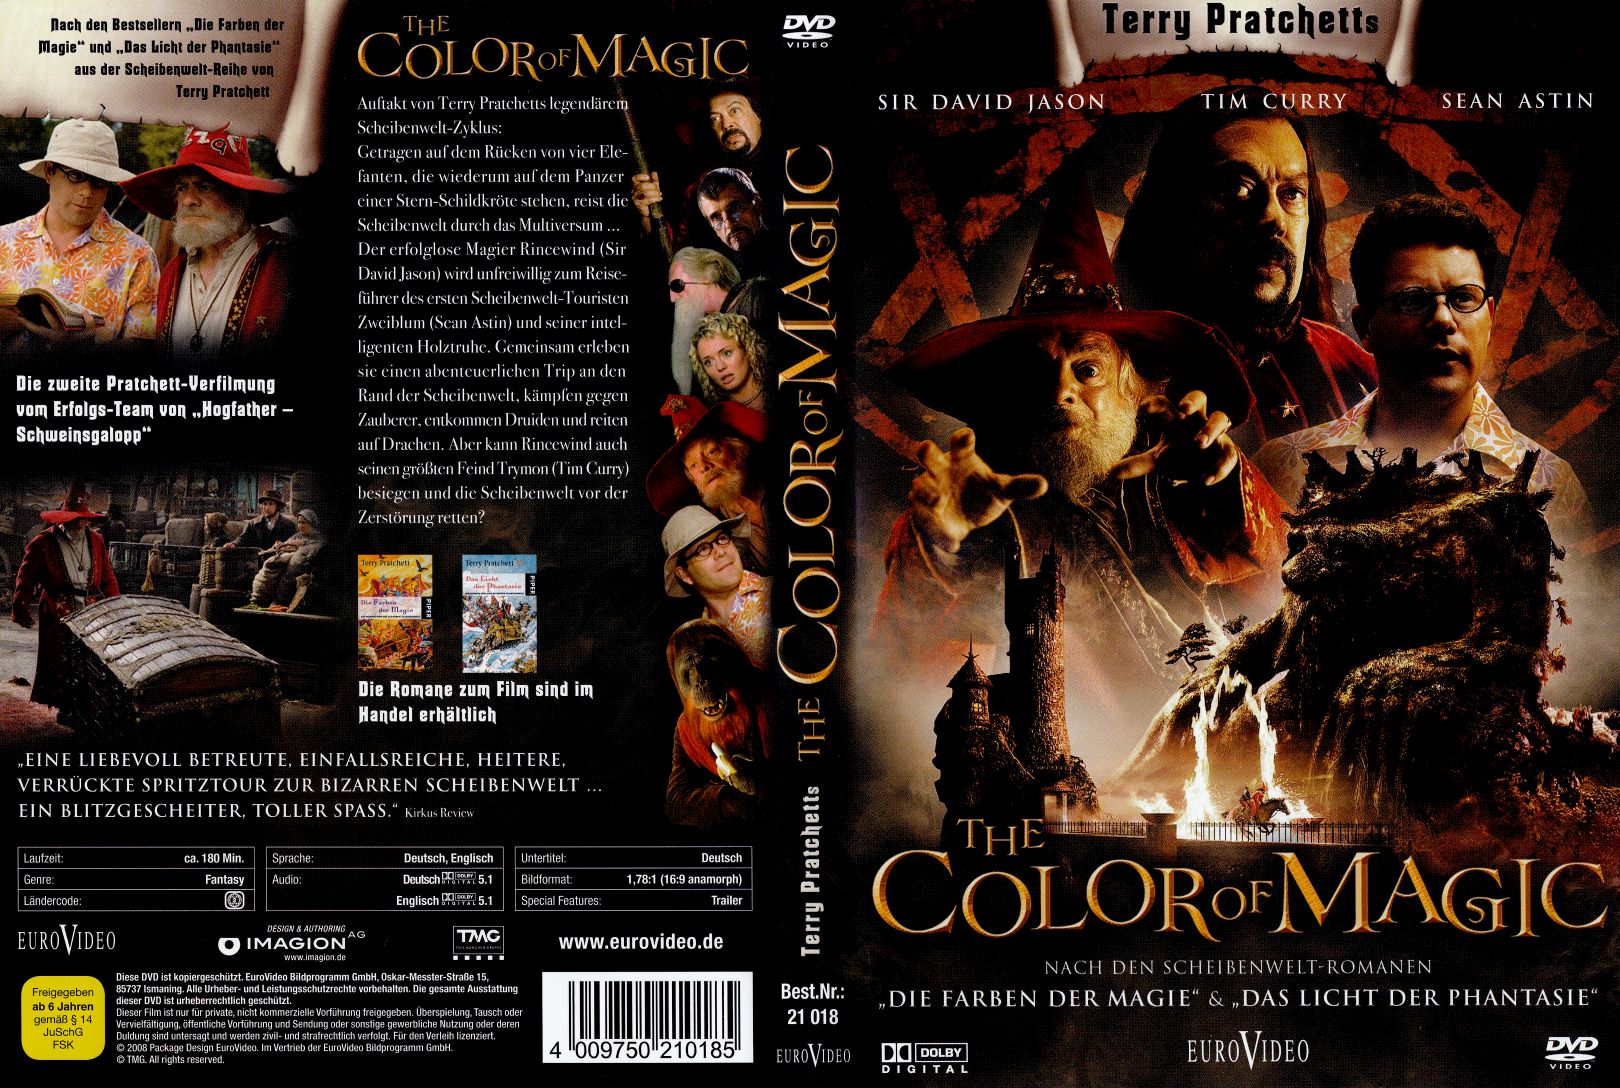 The Colour of Magic (2008) Part 2